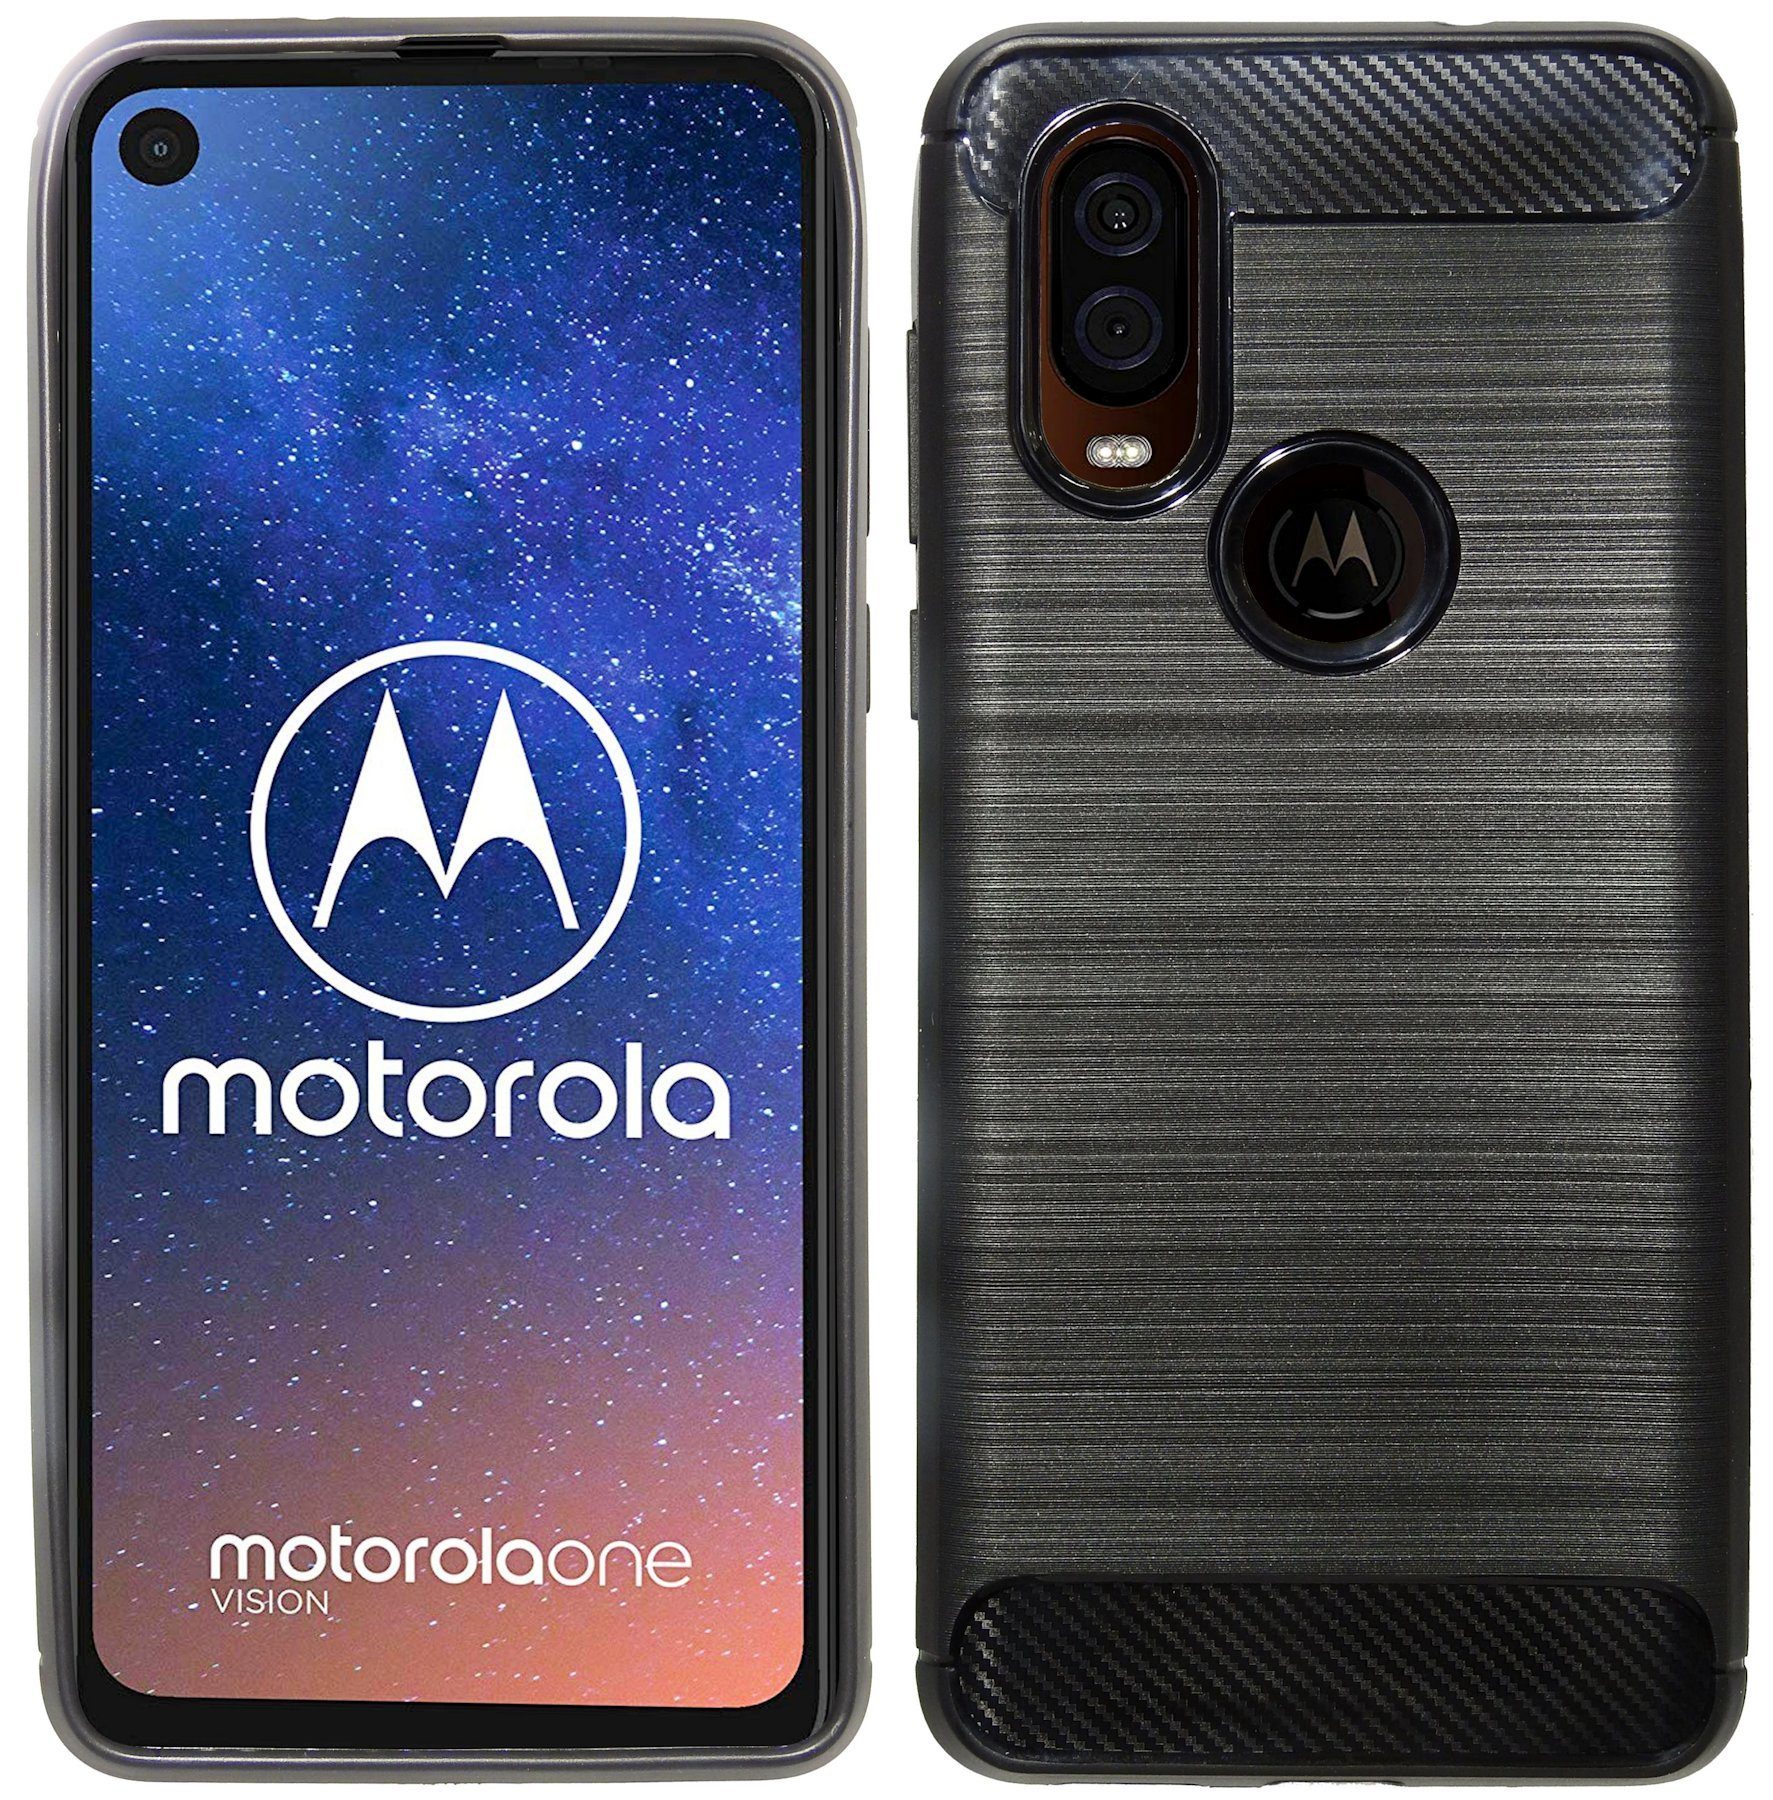 cofi1453 Handyhülle Silikon Hülle Carbon für Motorola Moto One Vision, Case Cover Schutzhülle Bumper